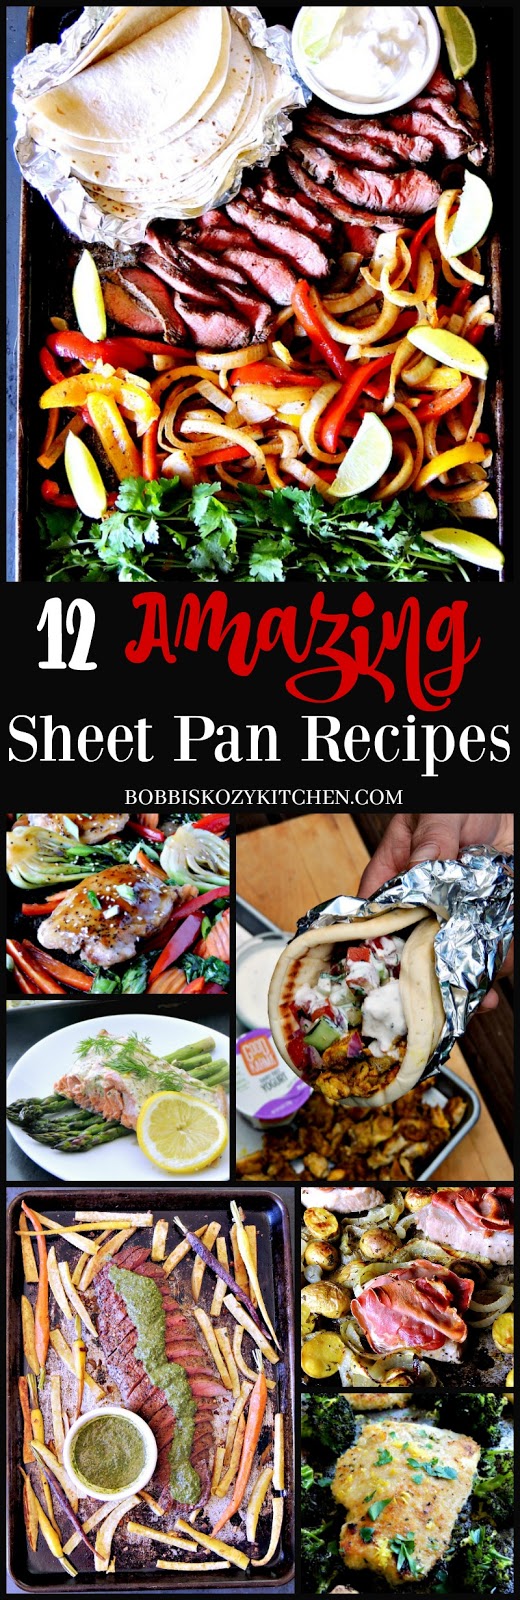 12 Amazing Sheet Pan Recipes from www.bobbiskozykitchen.com